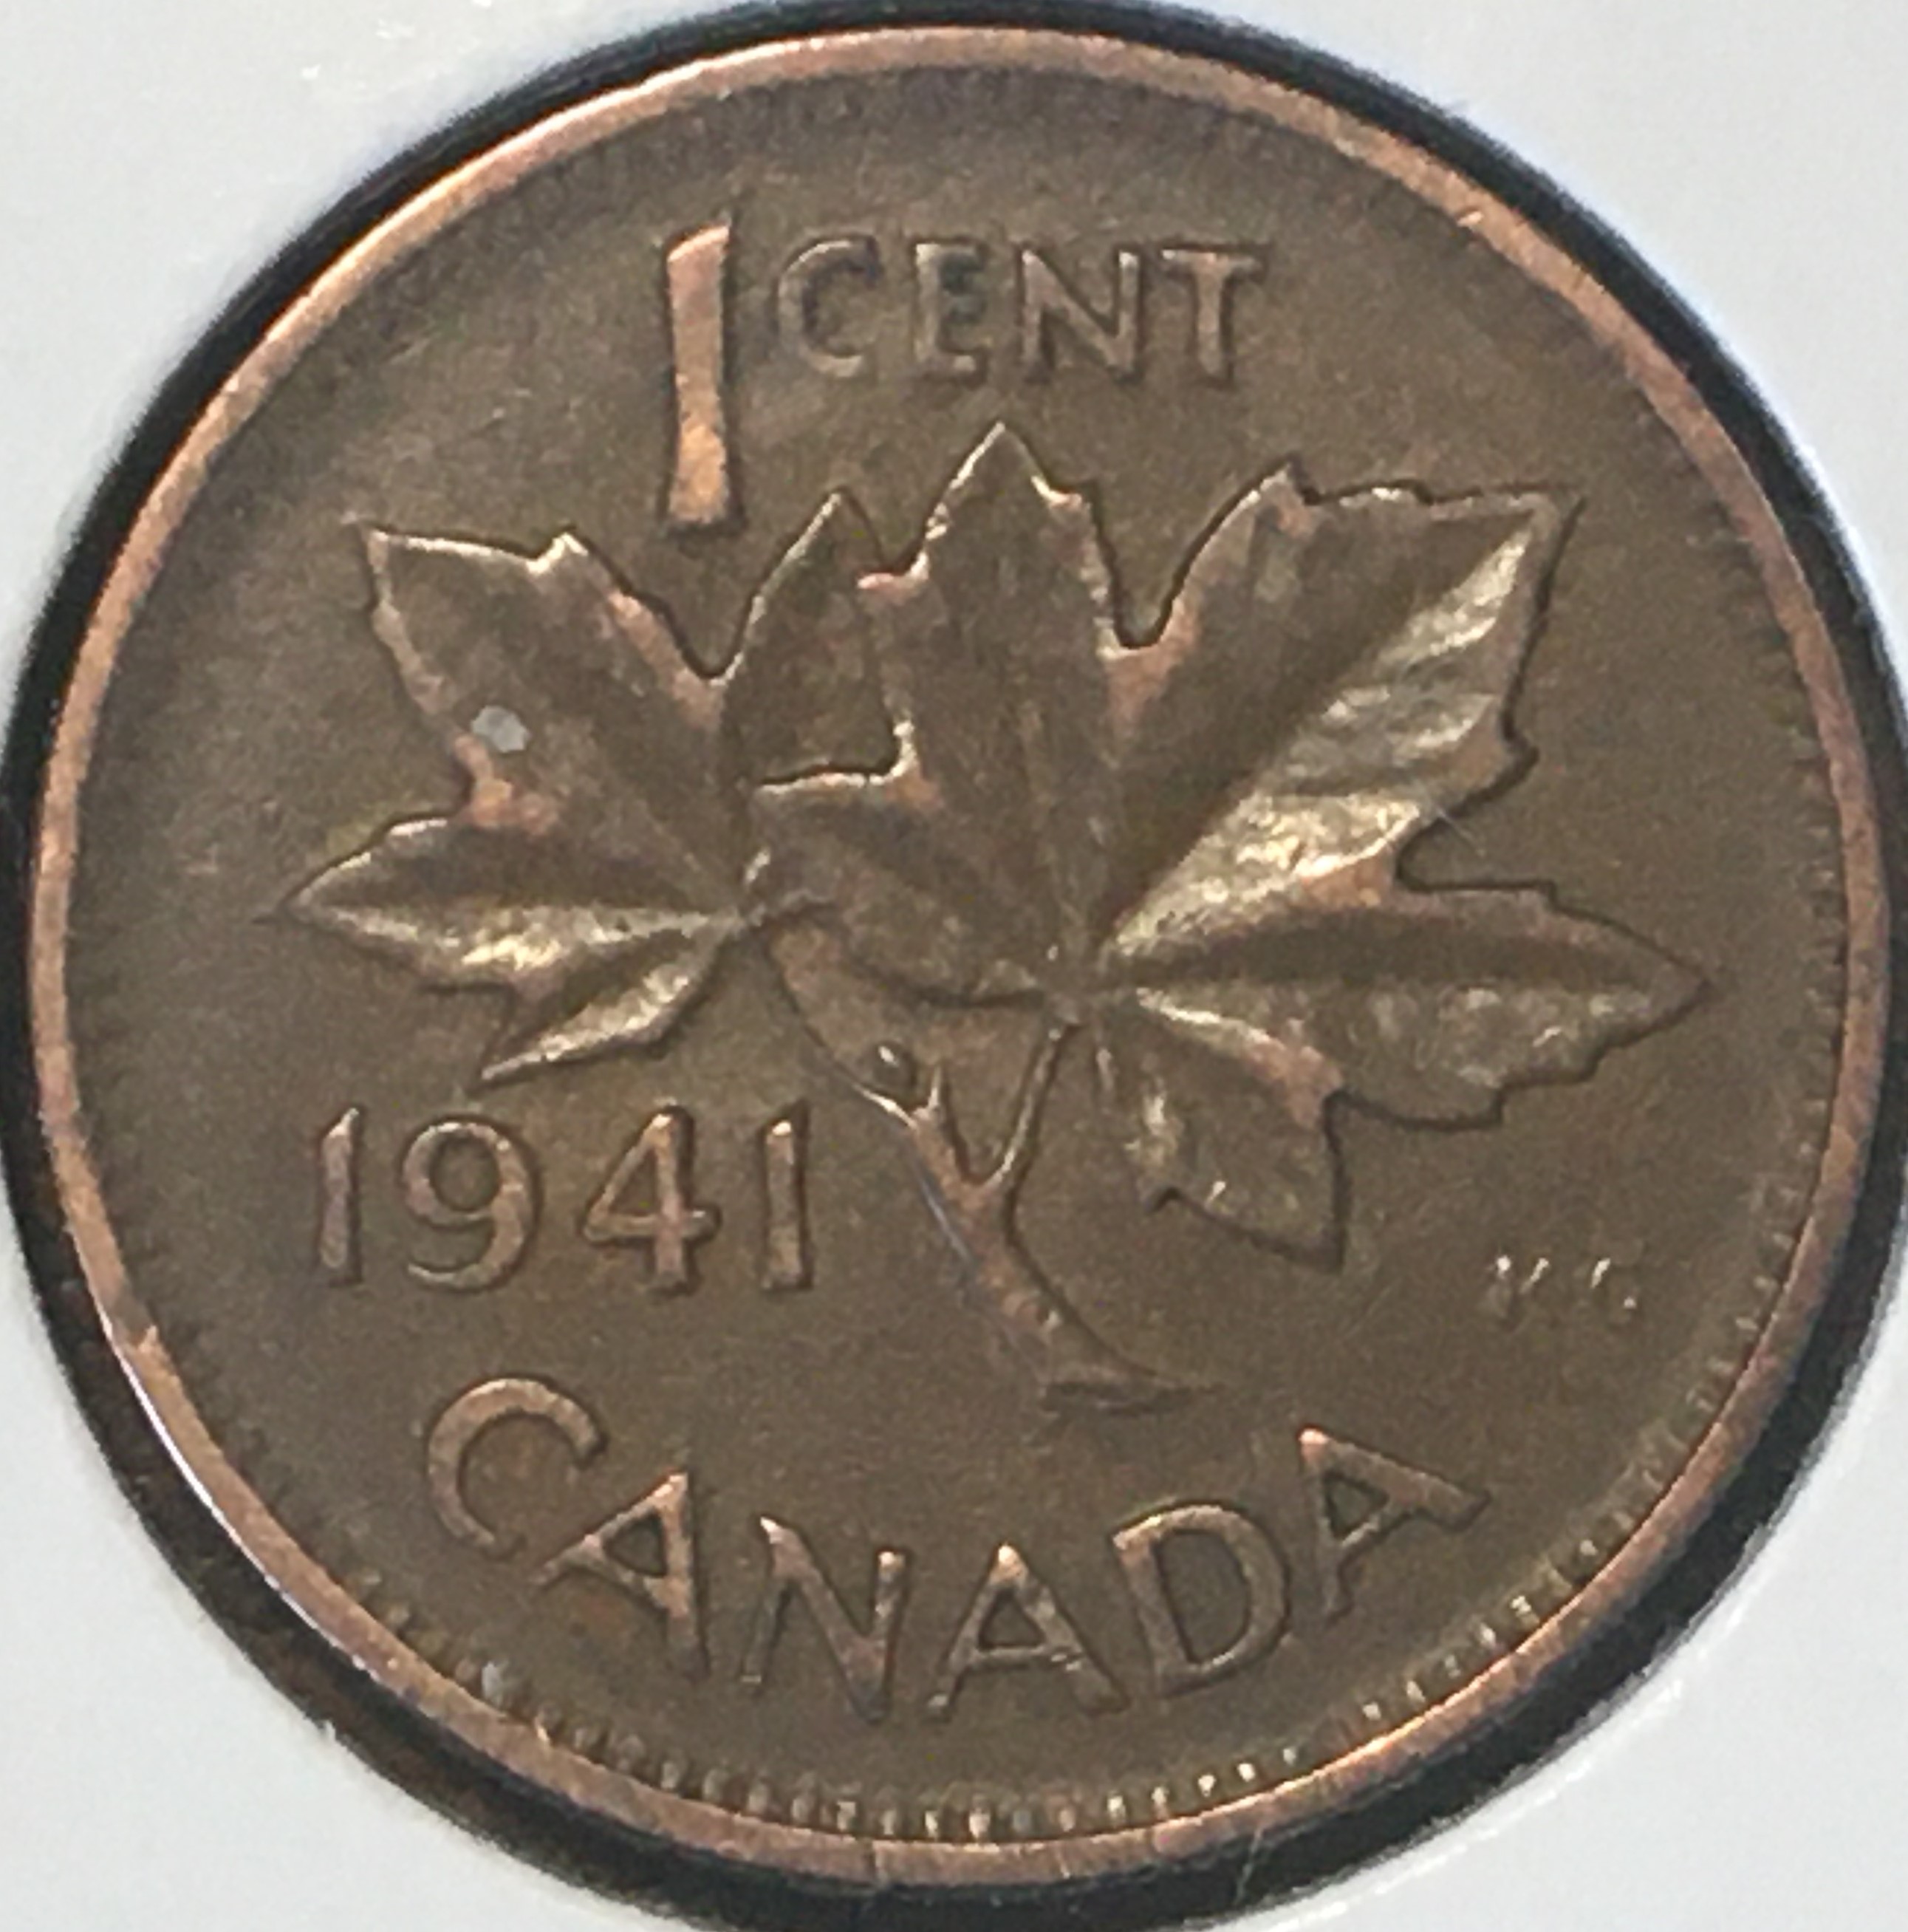 1 cent 1941 faible frappe revers.jpg